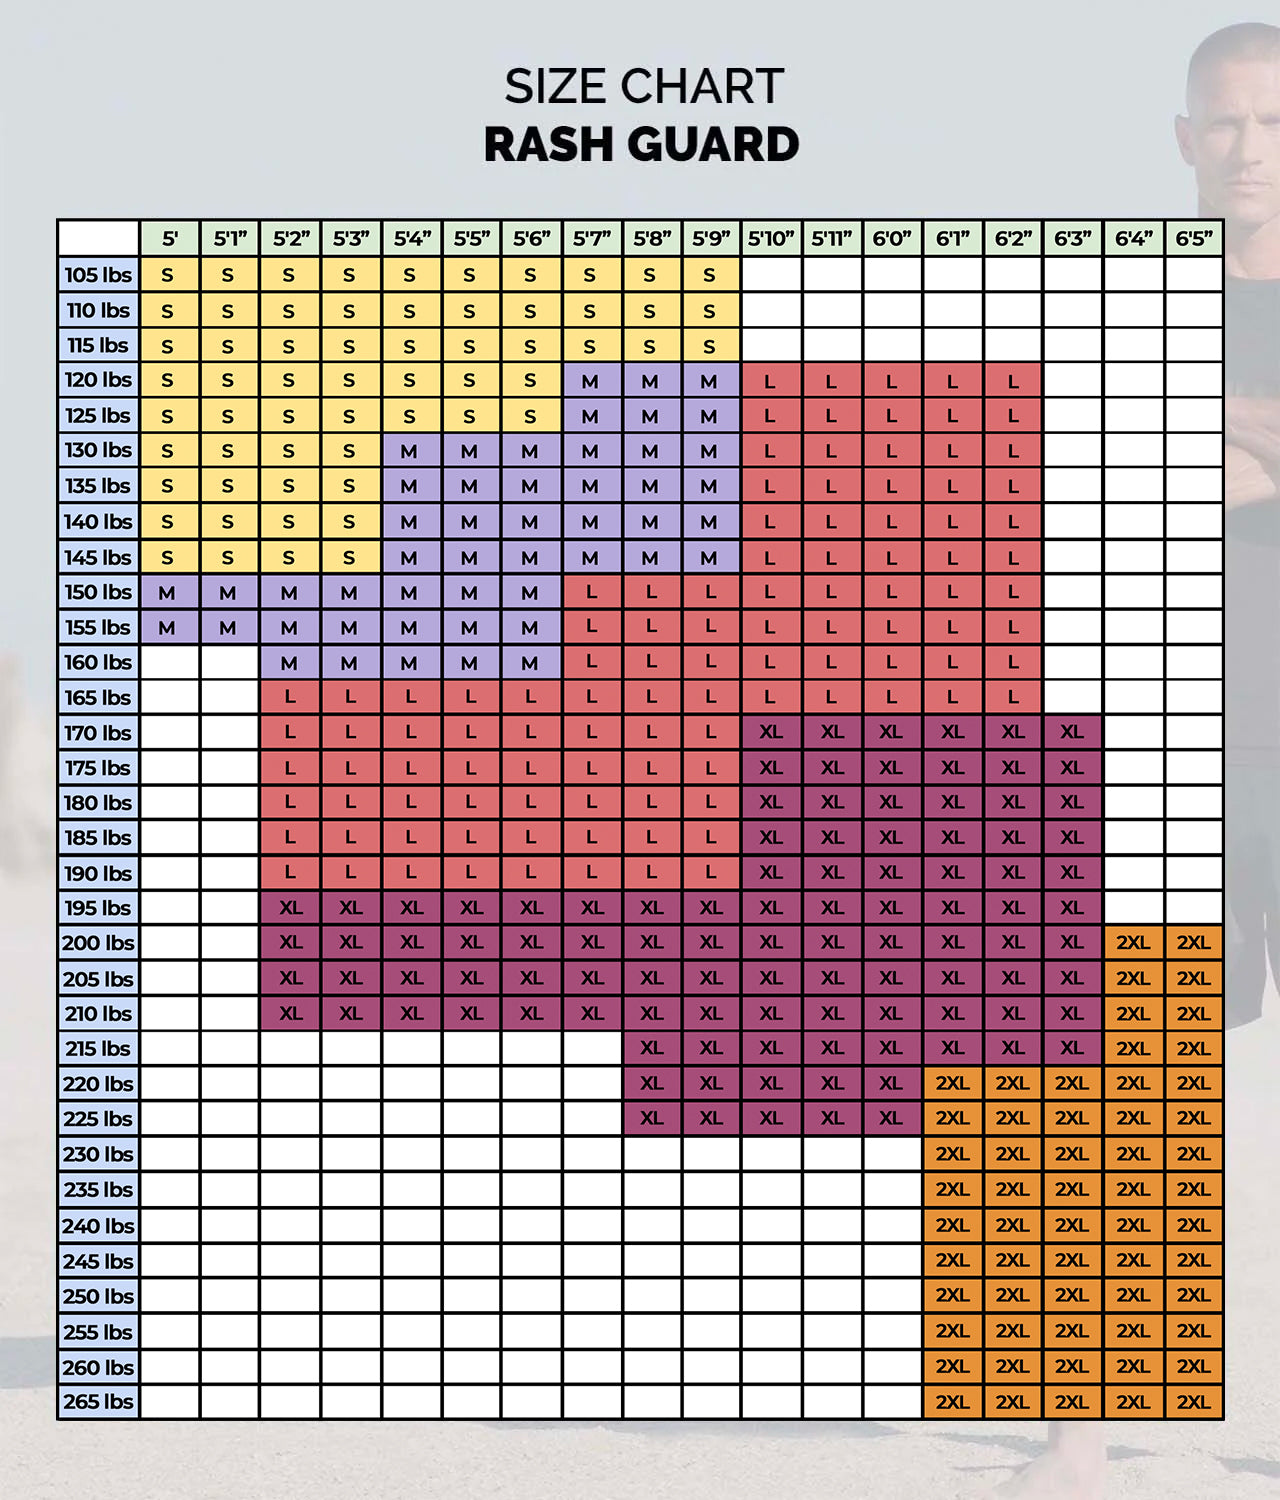 Elite Sports Men's Standard Red Short Sleeve Training Rash Guard Size Guide